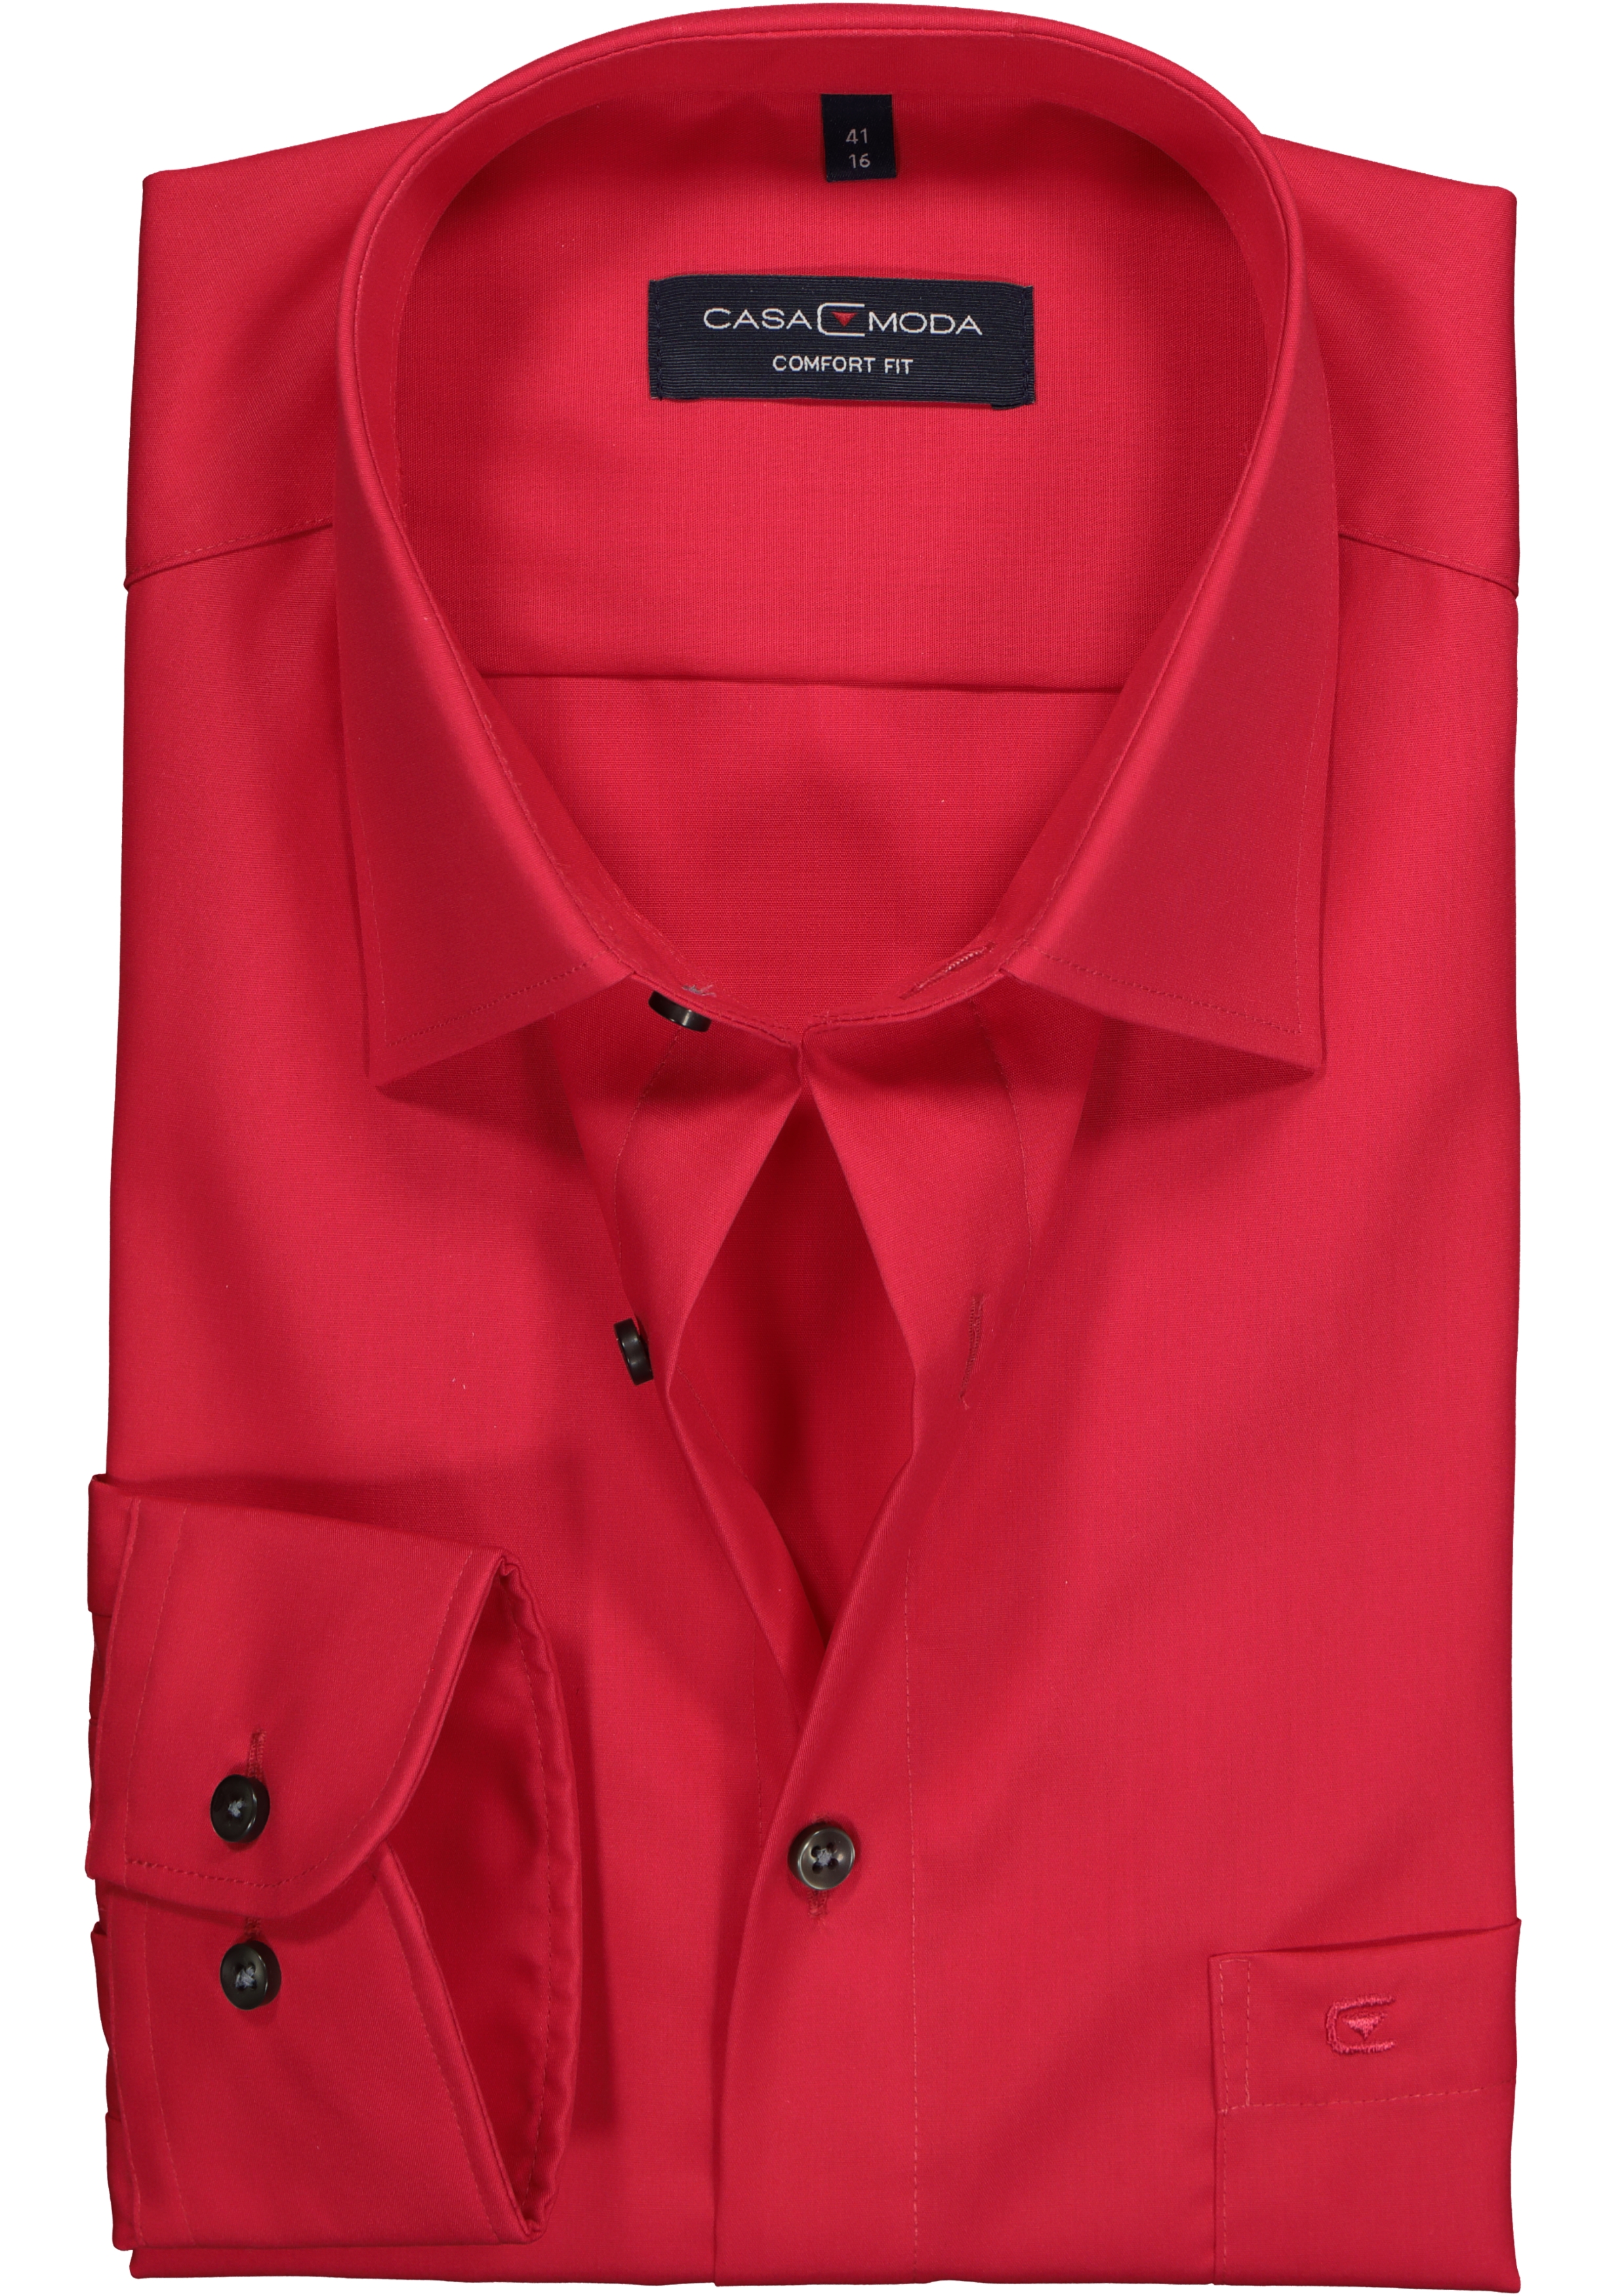 CASA MODA comfort fit overhemd, rood